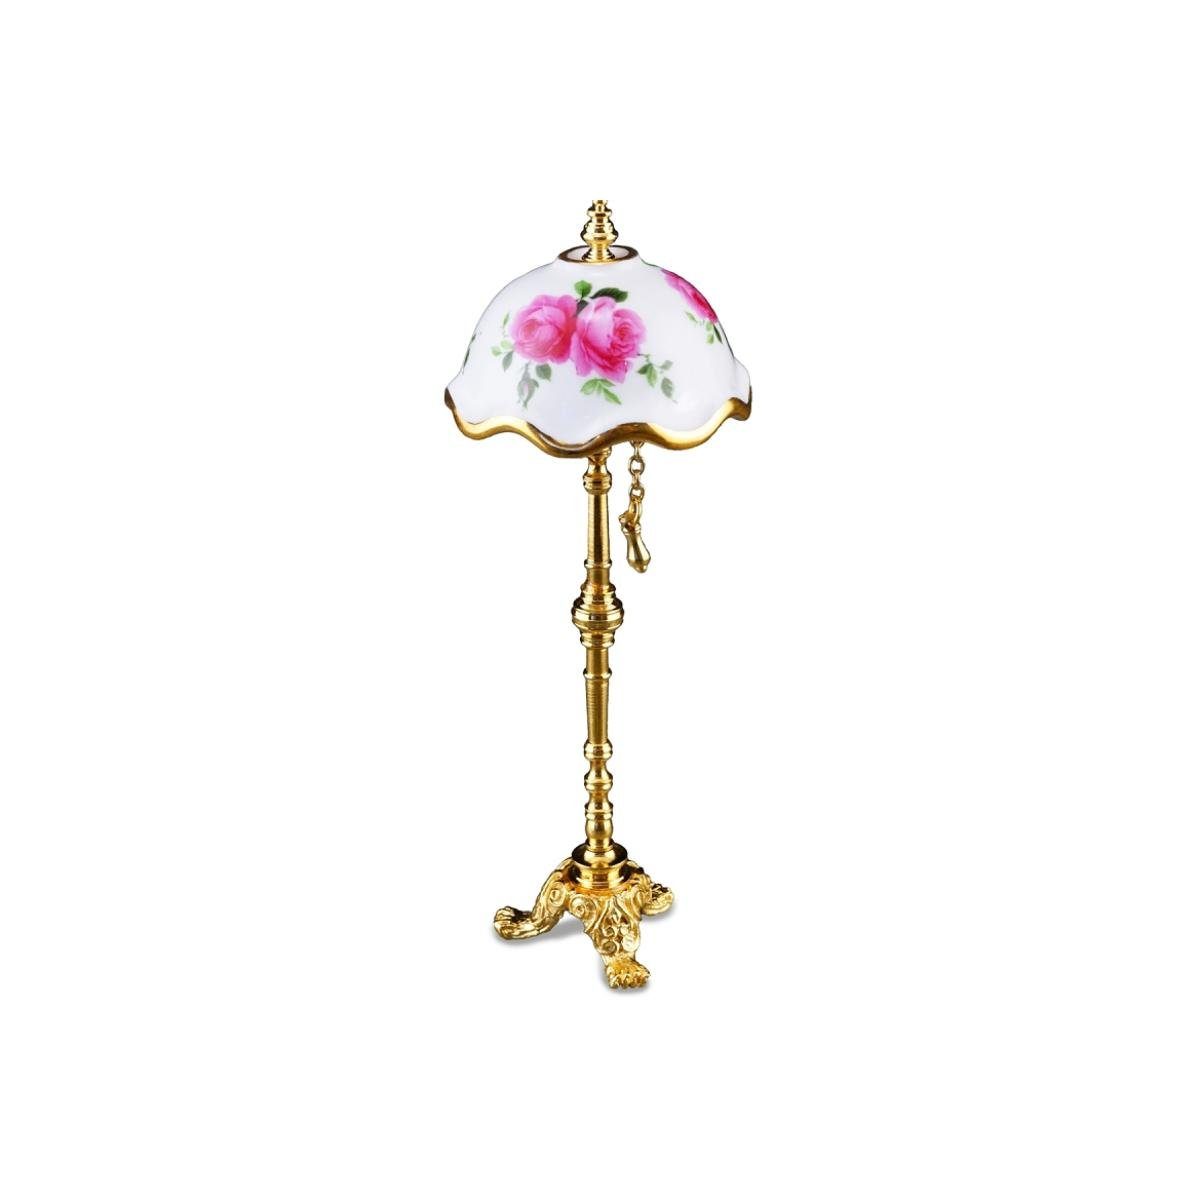 Reutter Porzellan Stehlampe Dekofigur Rose", - "Meißner Miniatur 001.888/3